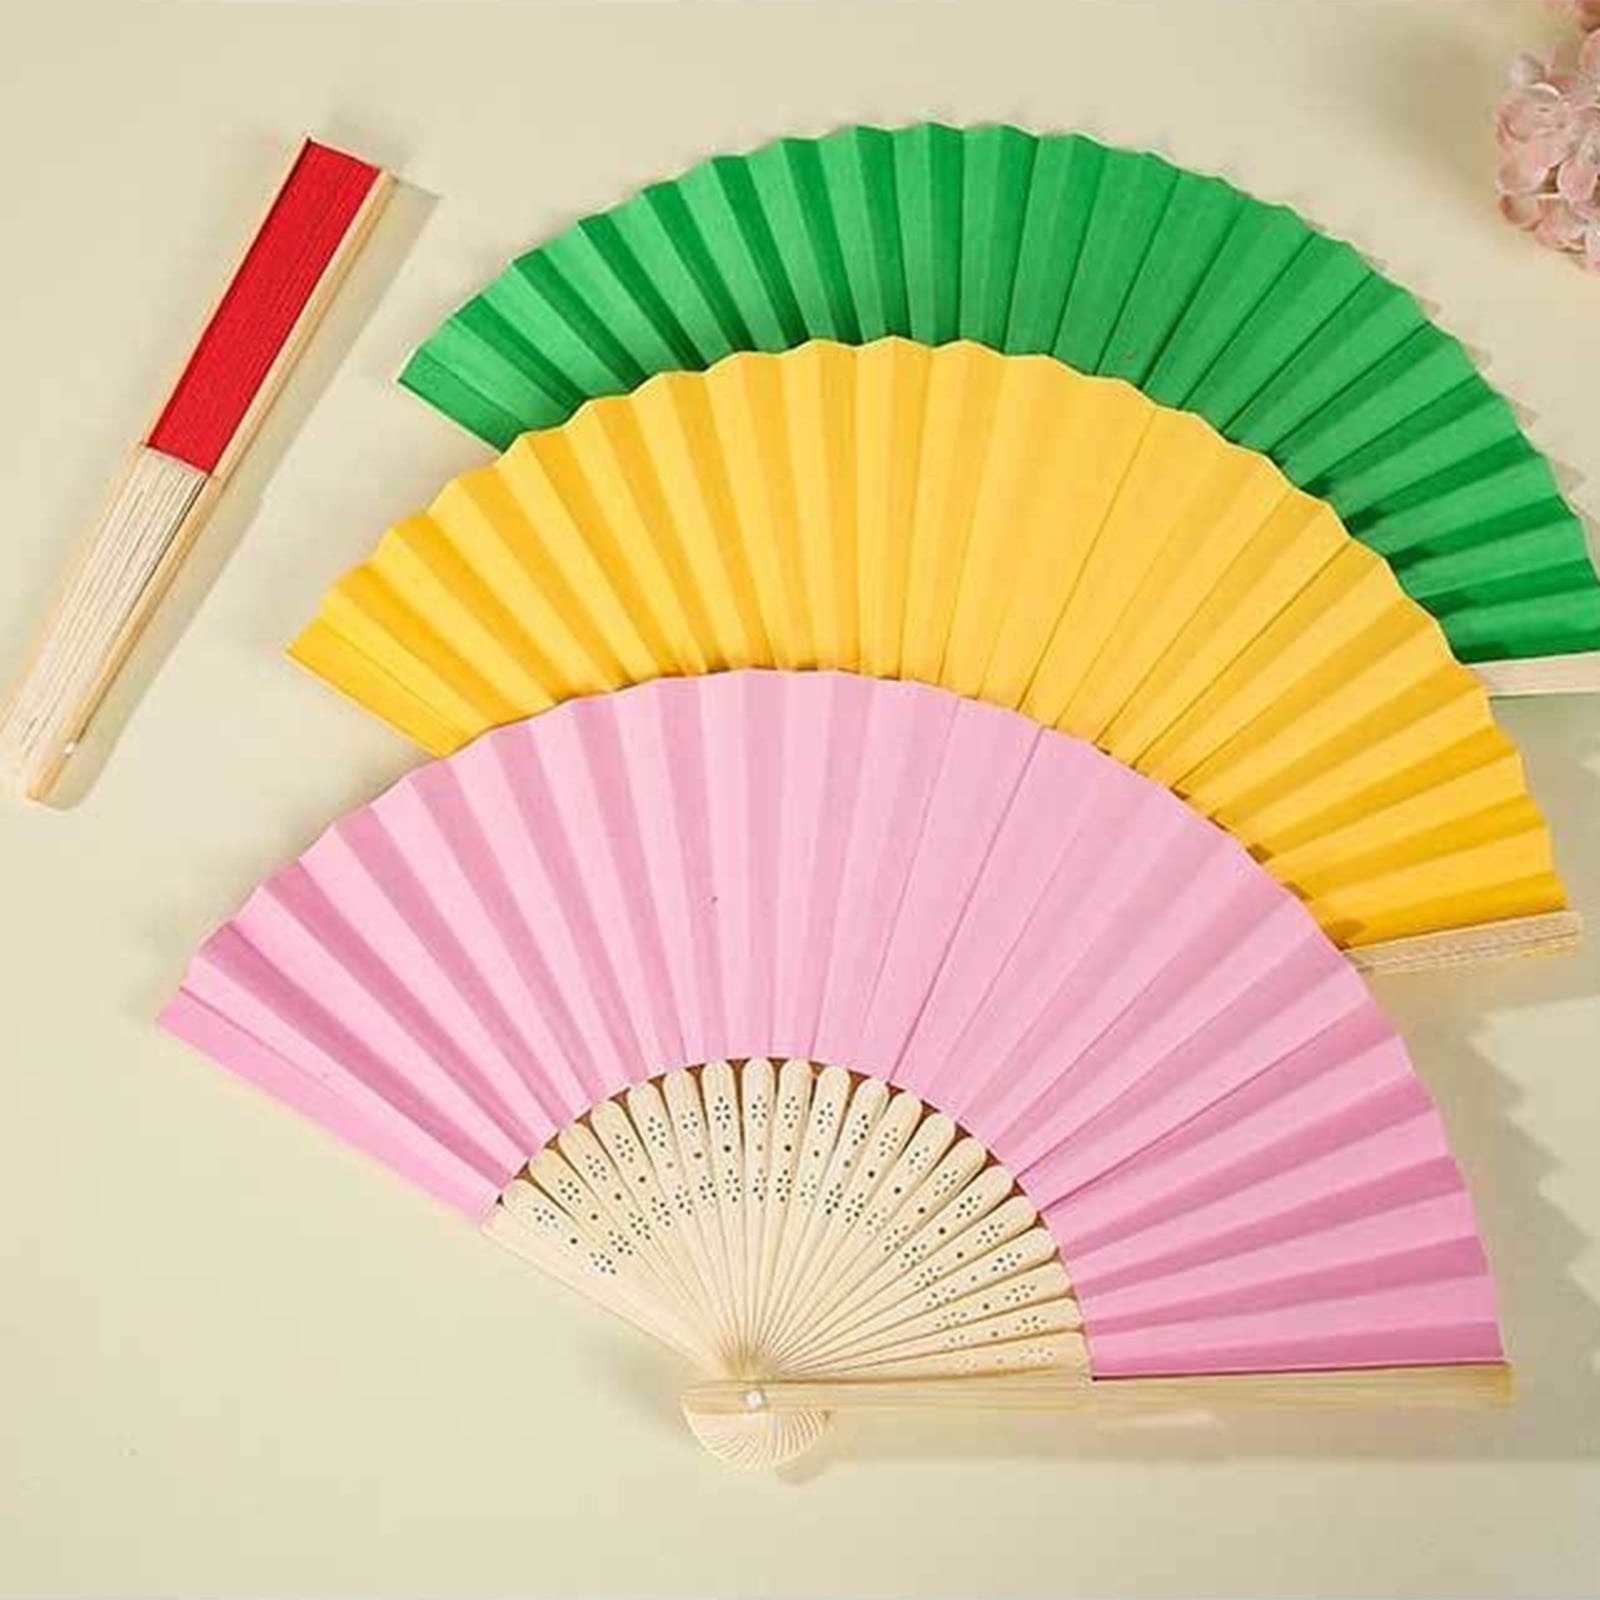 HSHFAMIIY 11Pcs Folding Paper Fans - Bamboo Hand Fan Foldable for